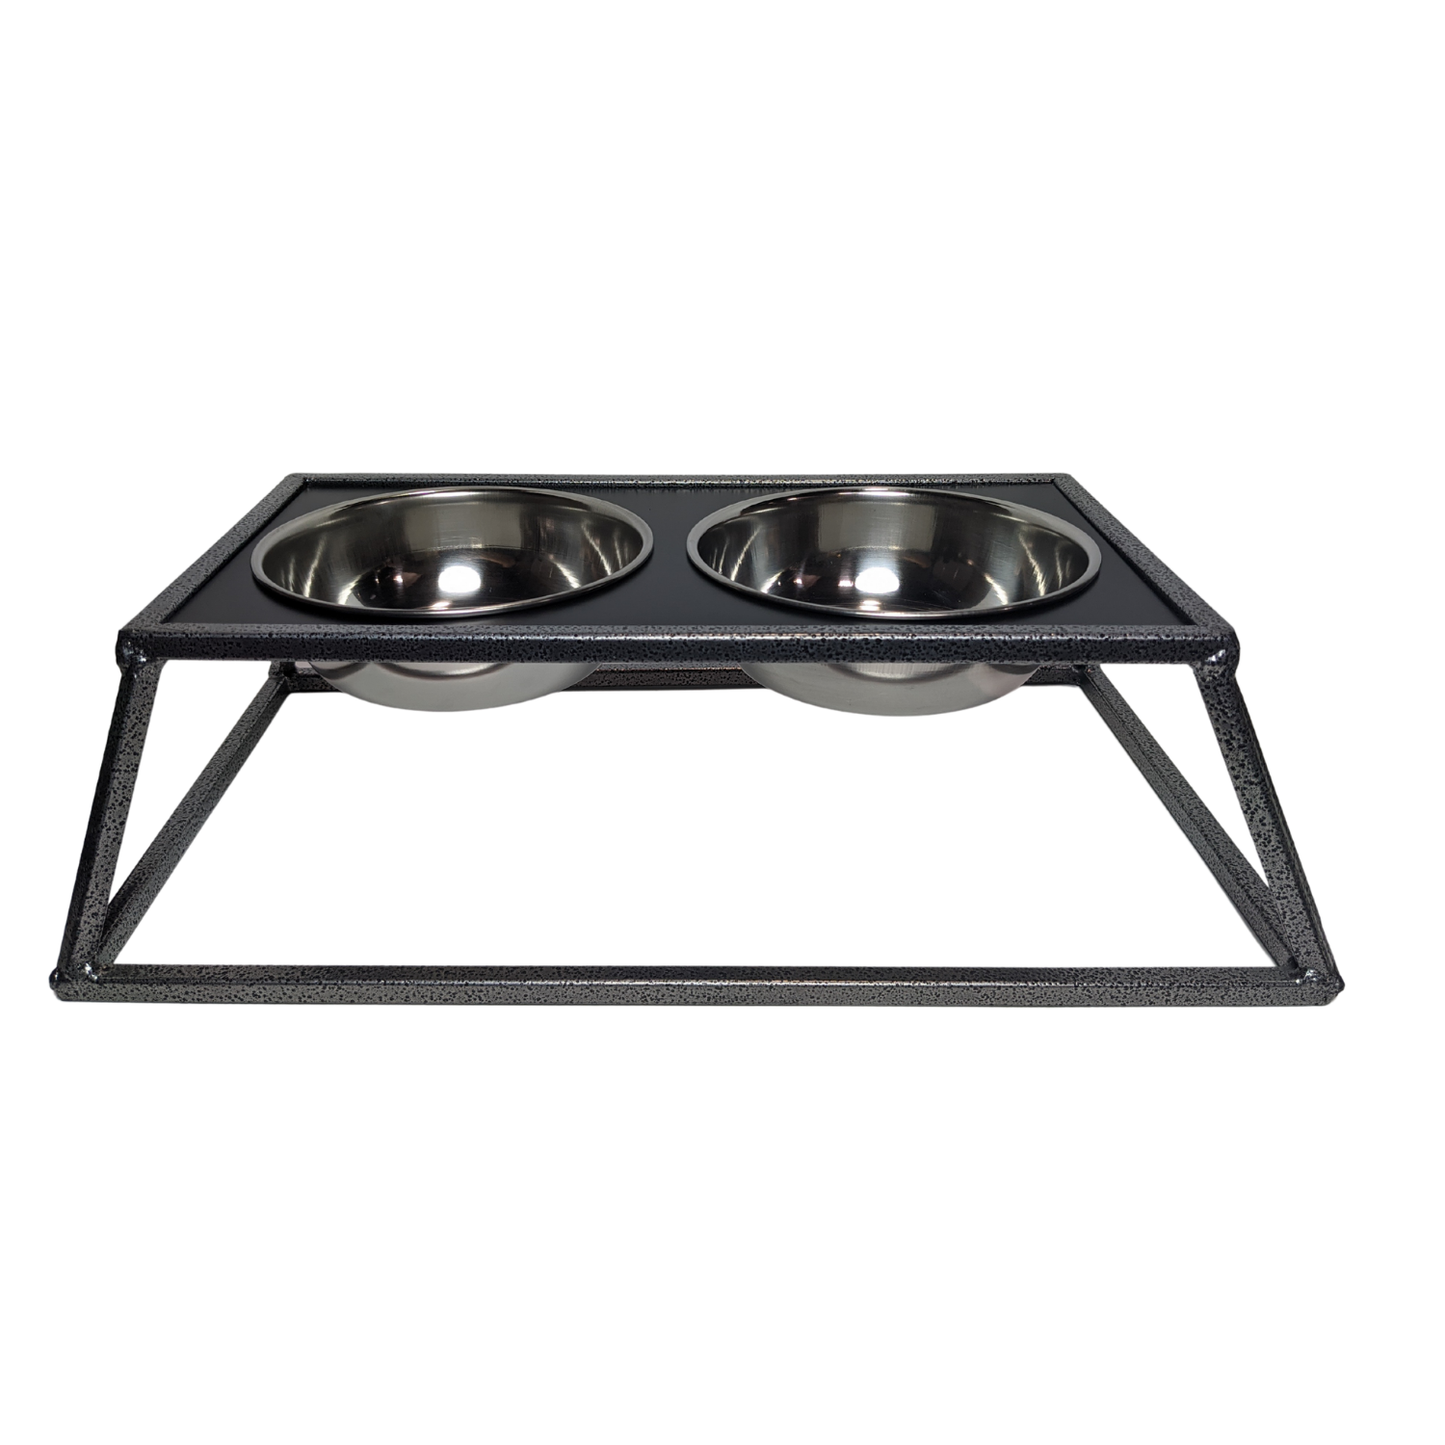 Country Living Elevated Dog Feeder - Galvanized Black Modern Design (2 Bowls - 24 oz each)